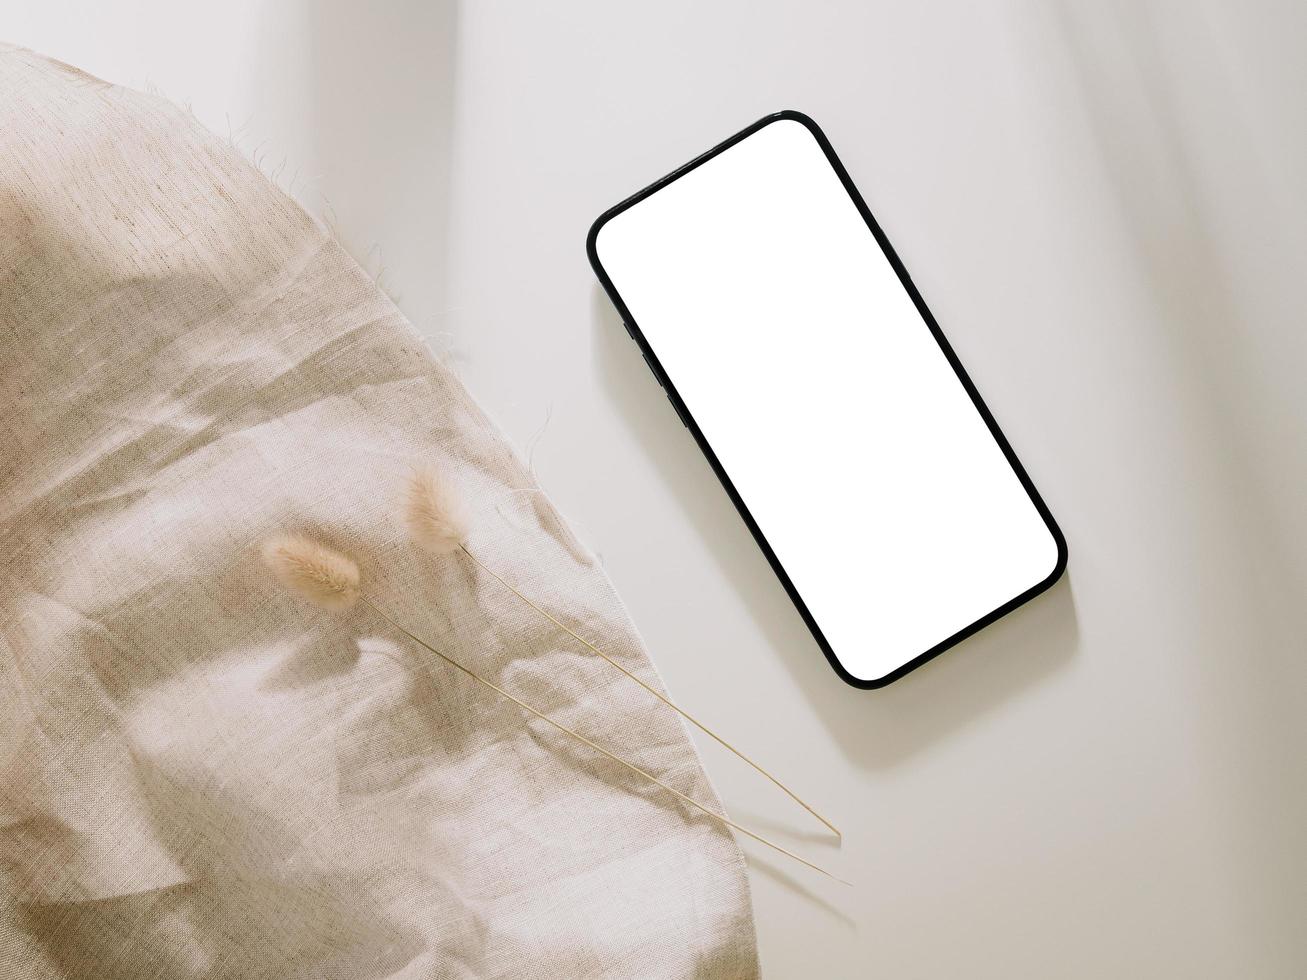 Smartphone mockup, Phone with blank screen template. Flat lay photo